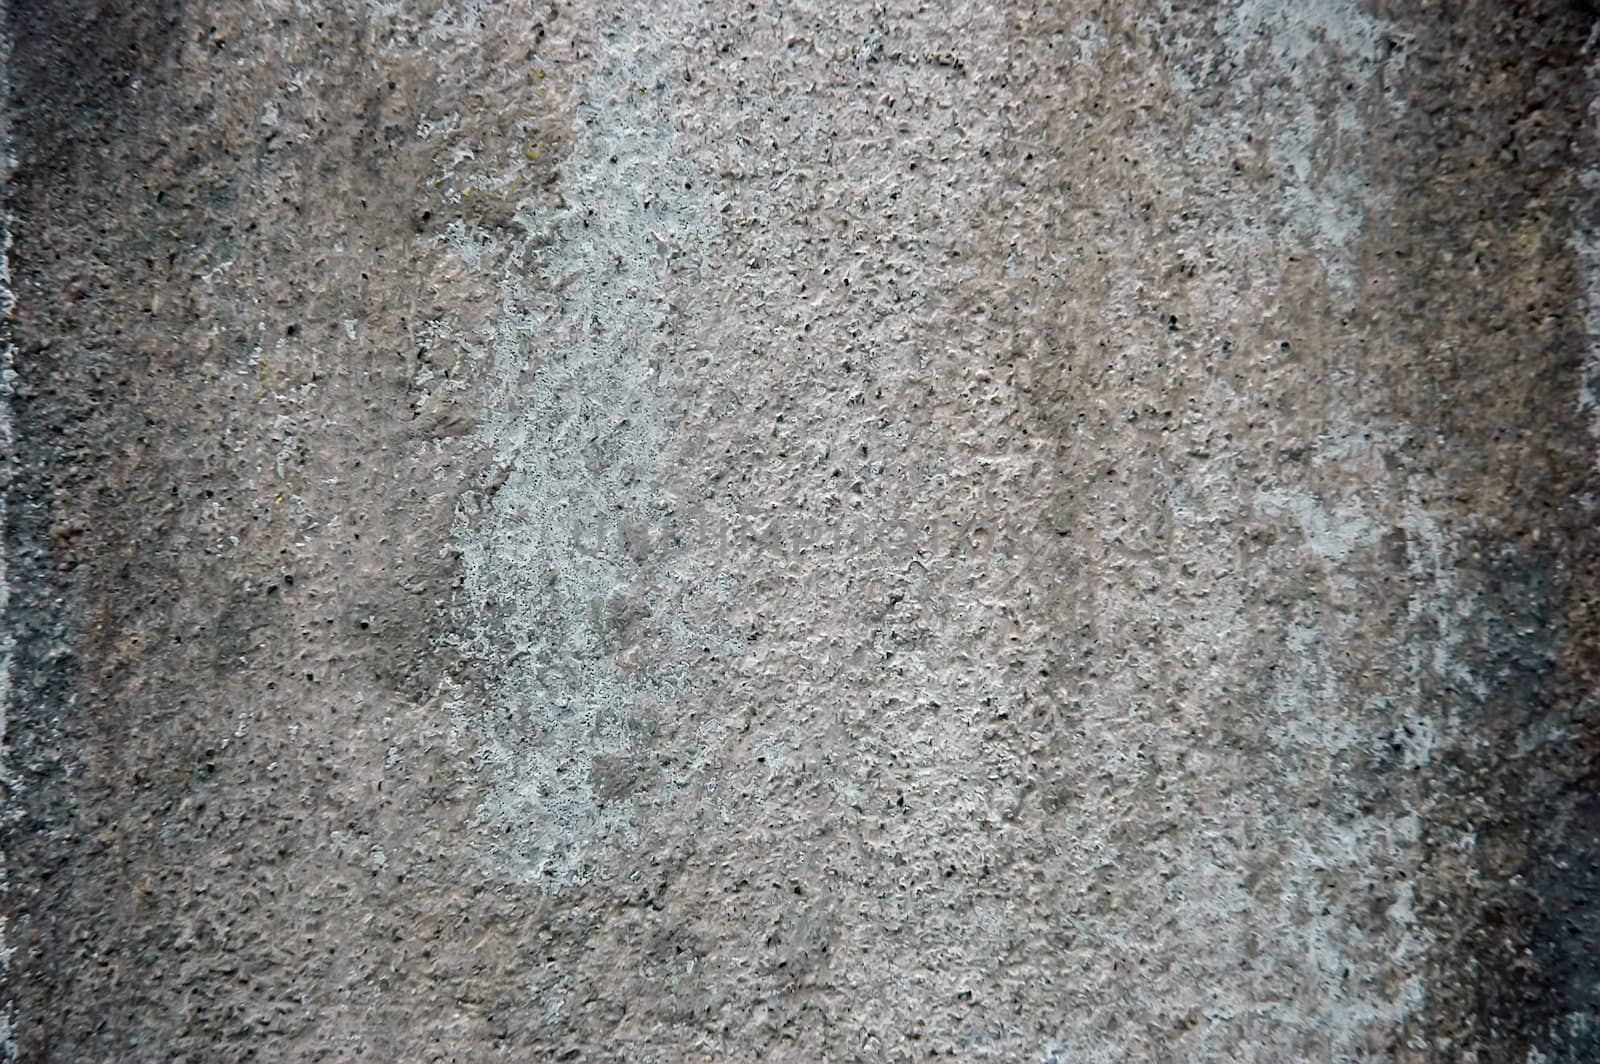 Ground Cement by phanlop88